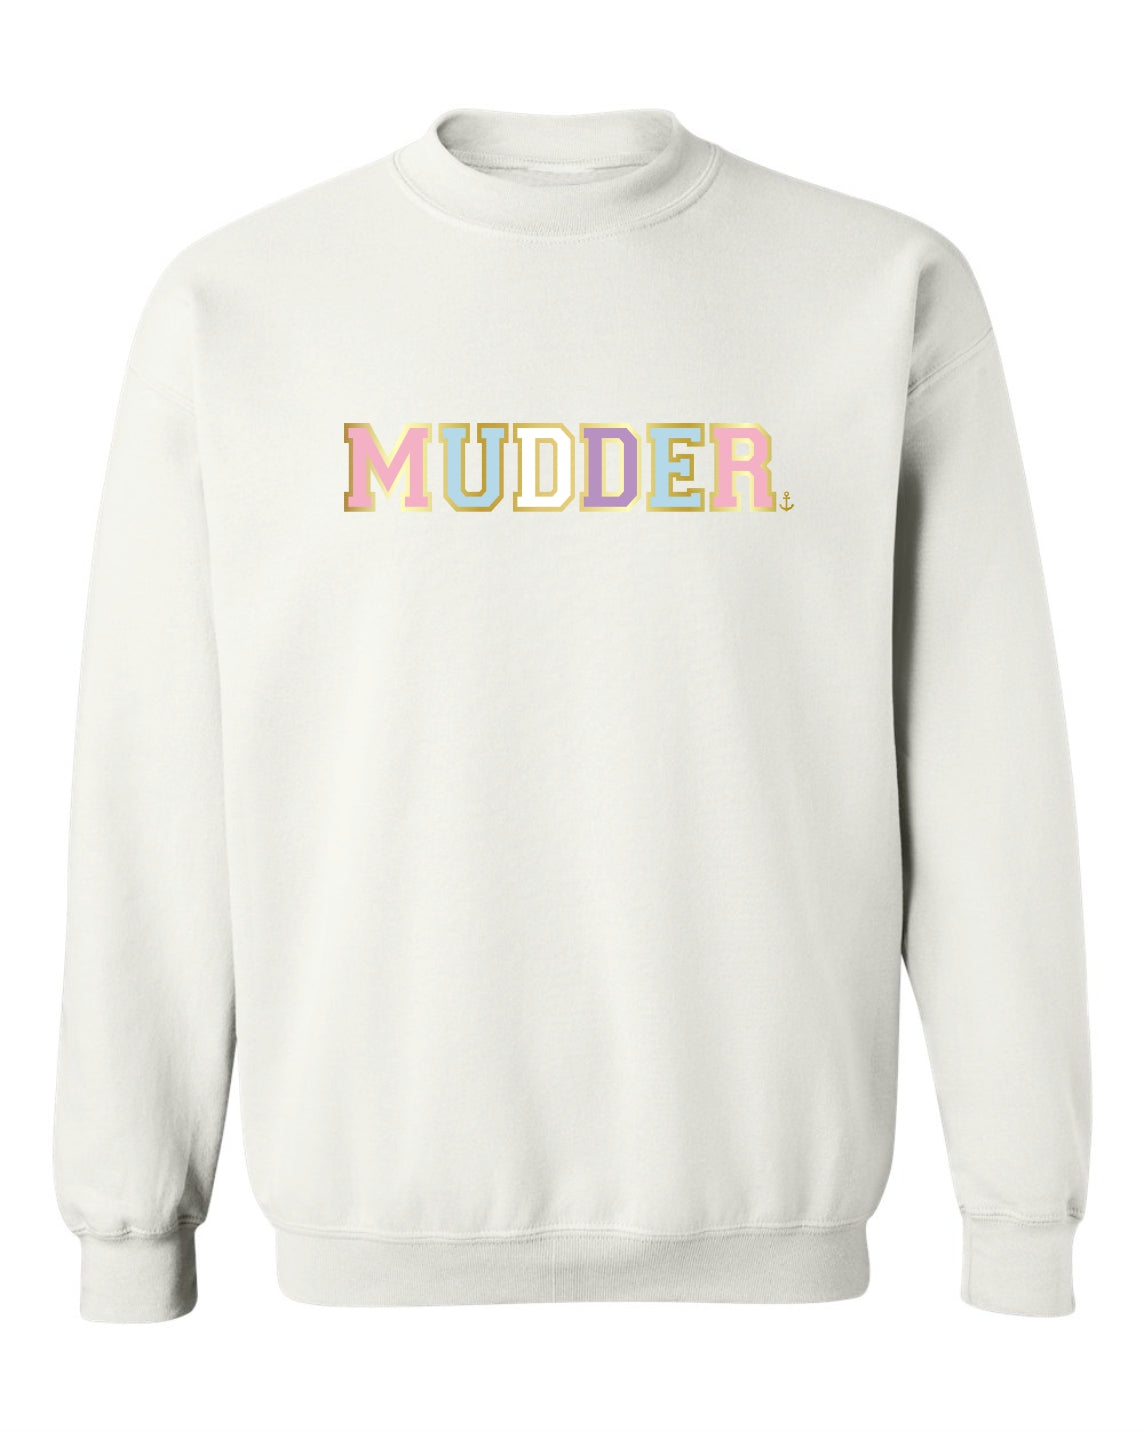 "Mudder" Varsity Unisex Crewneck Sweatshirt